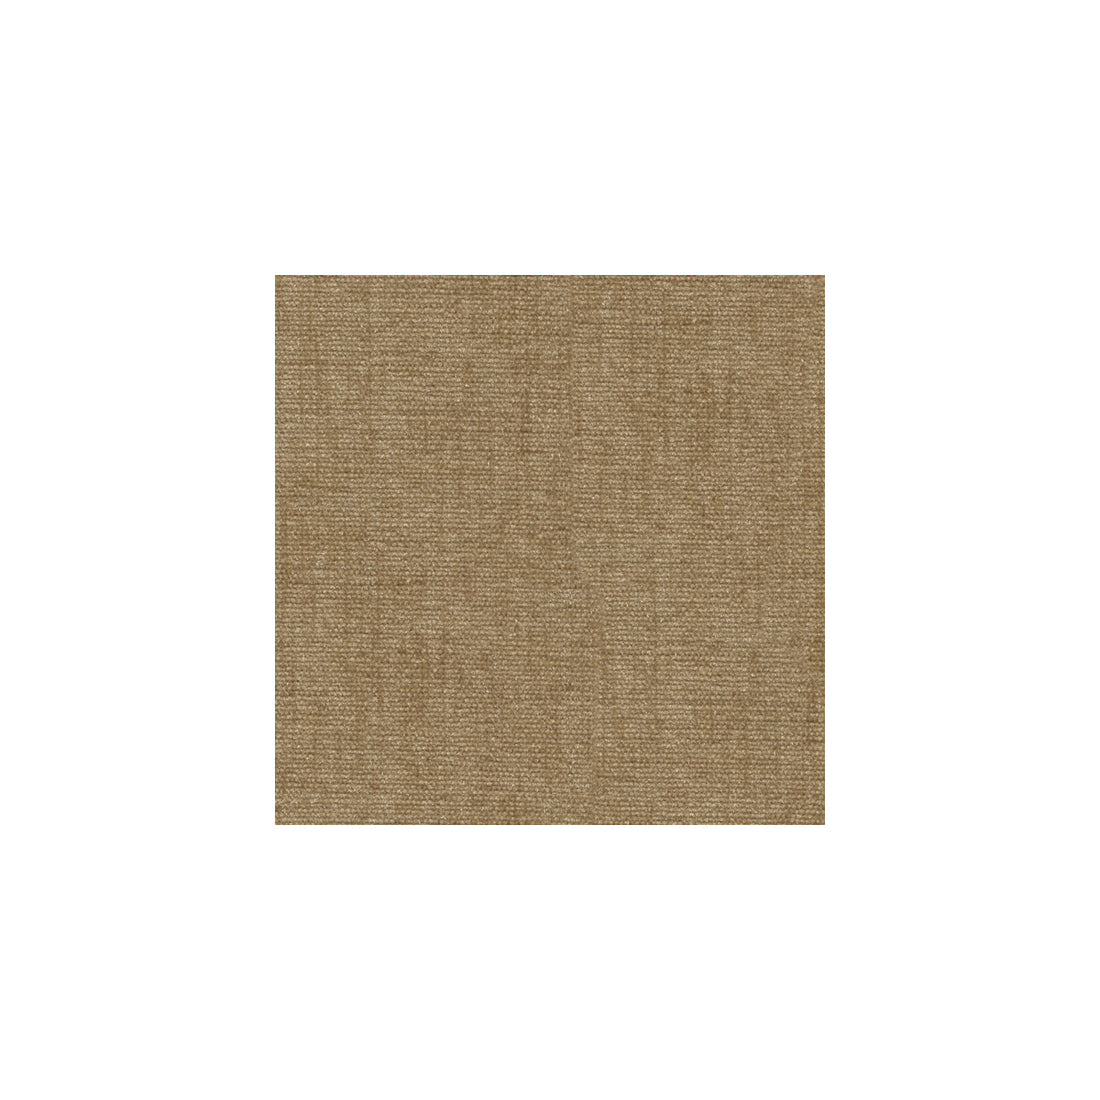 Lavish fabric in sand color - pattern 26837.116.0 - by Kravet Smart